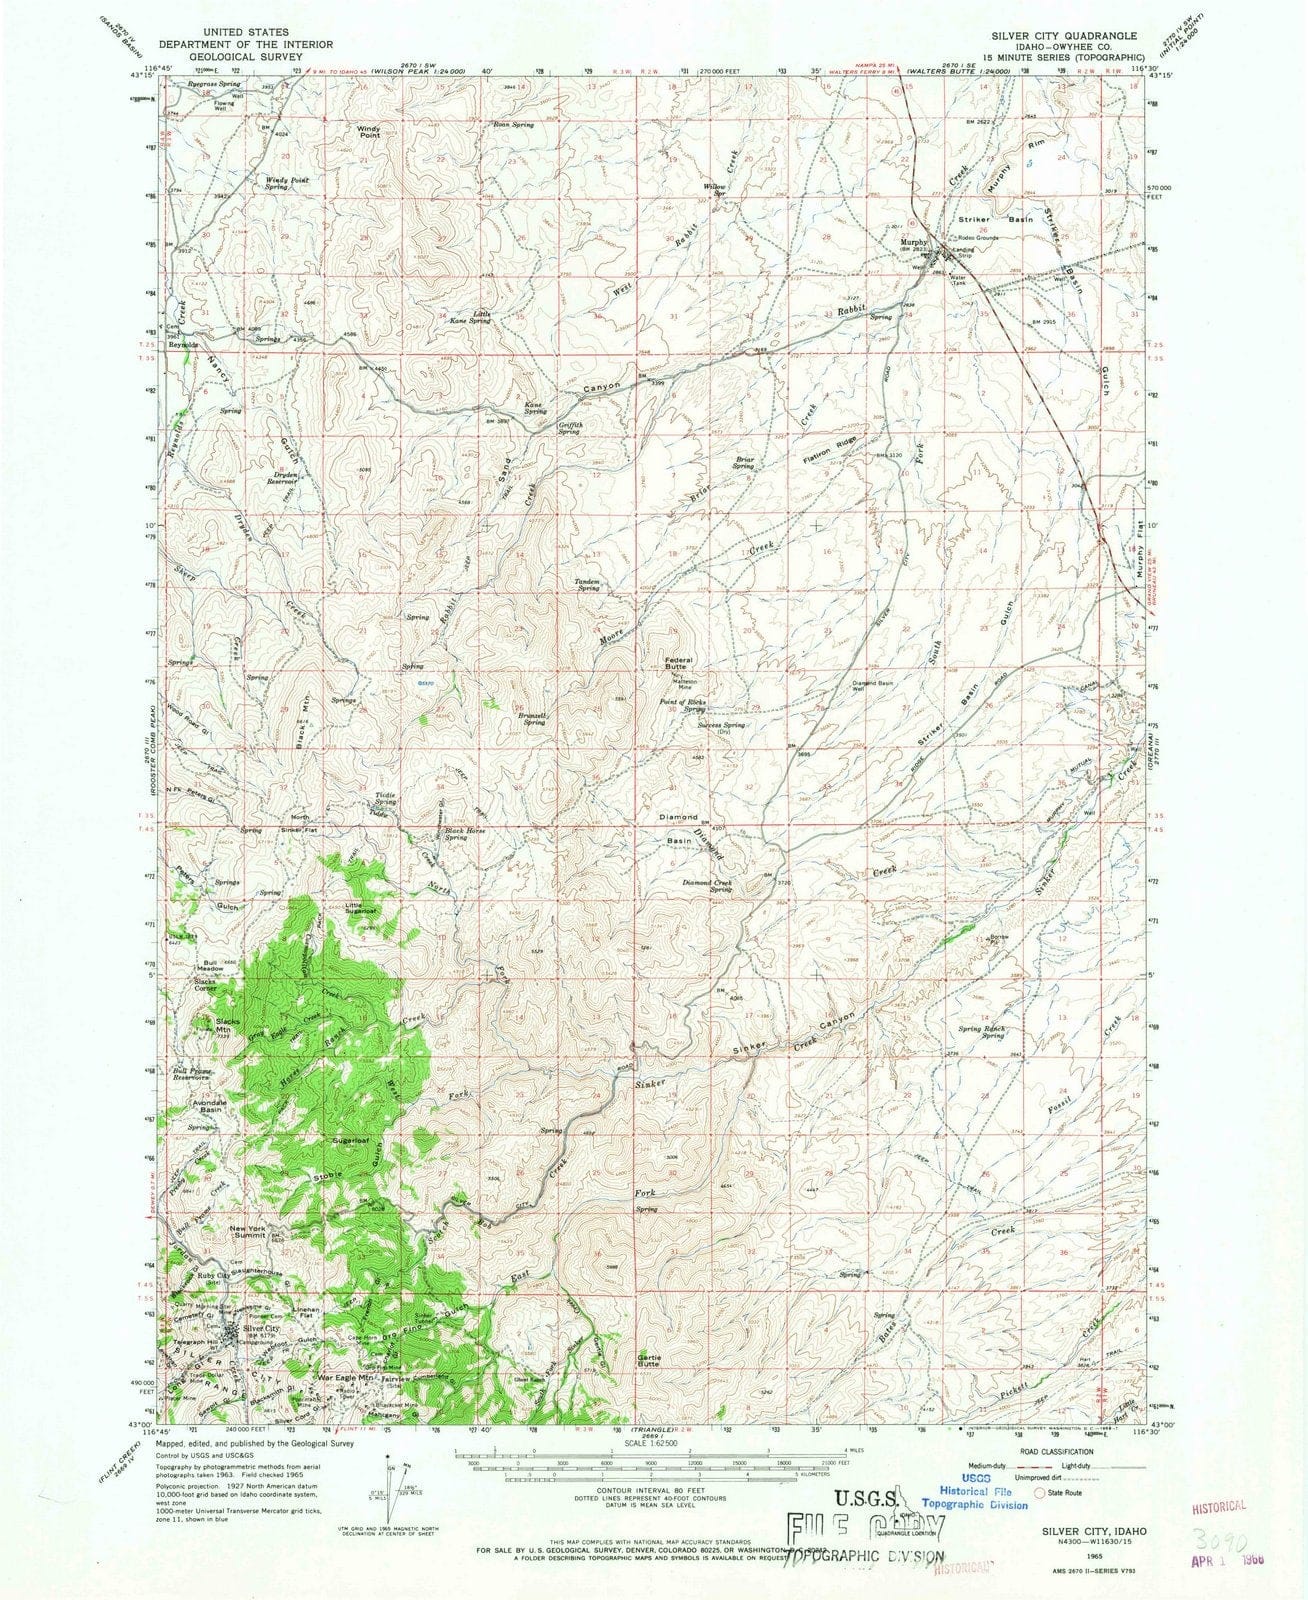 1965 Silver City, ID - Idaho - USGS Topographic Map